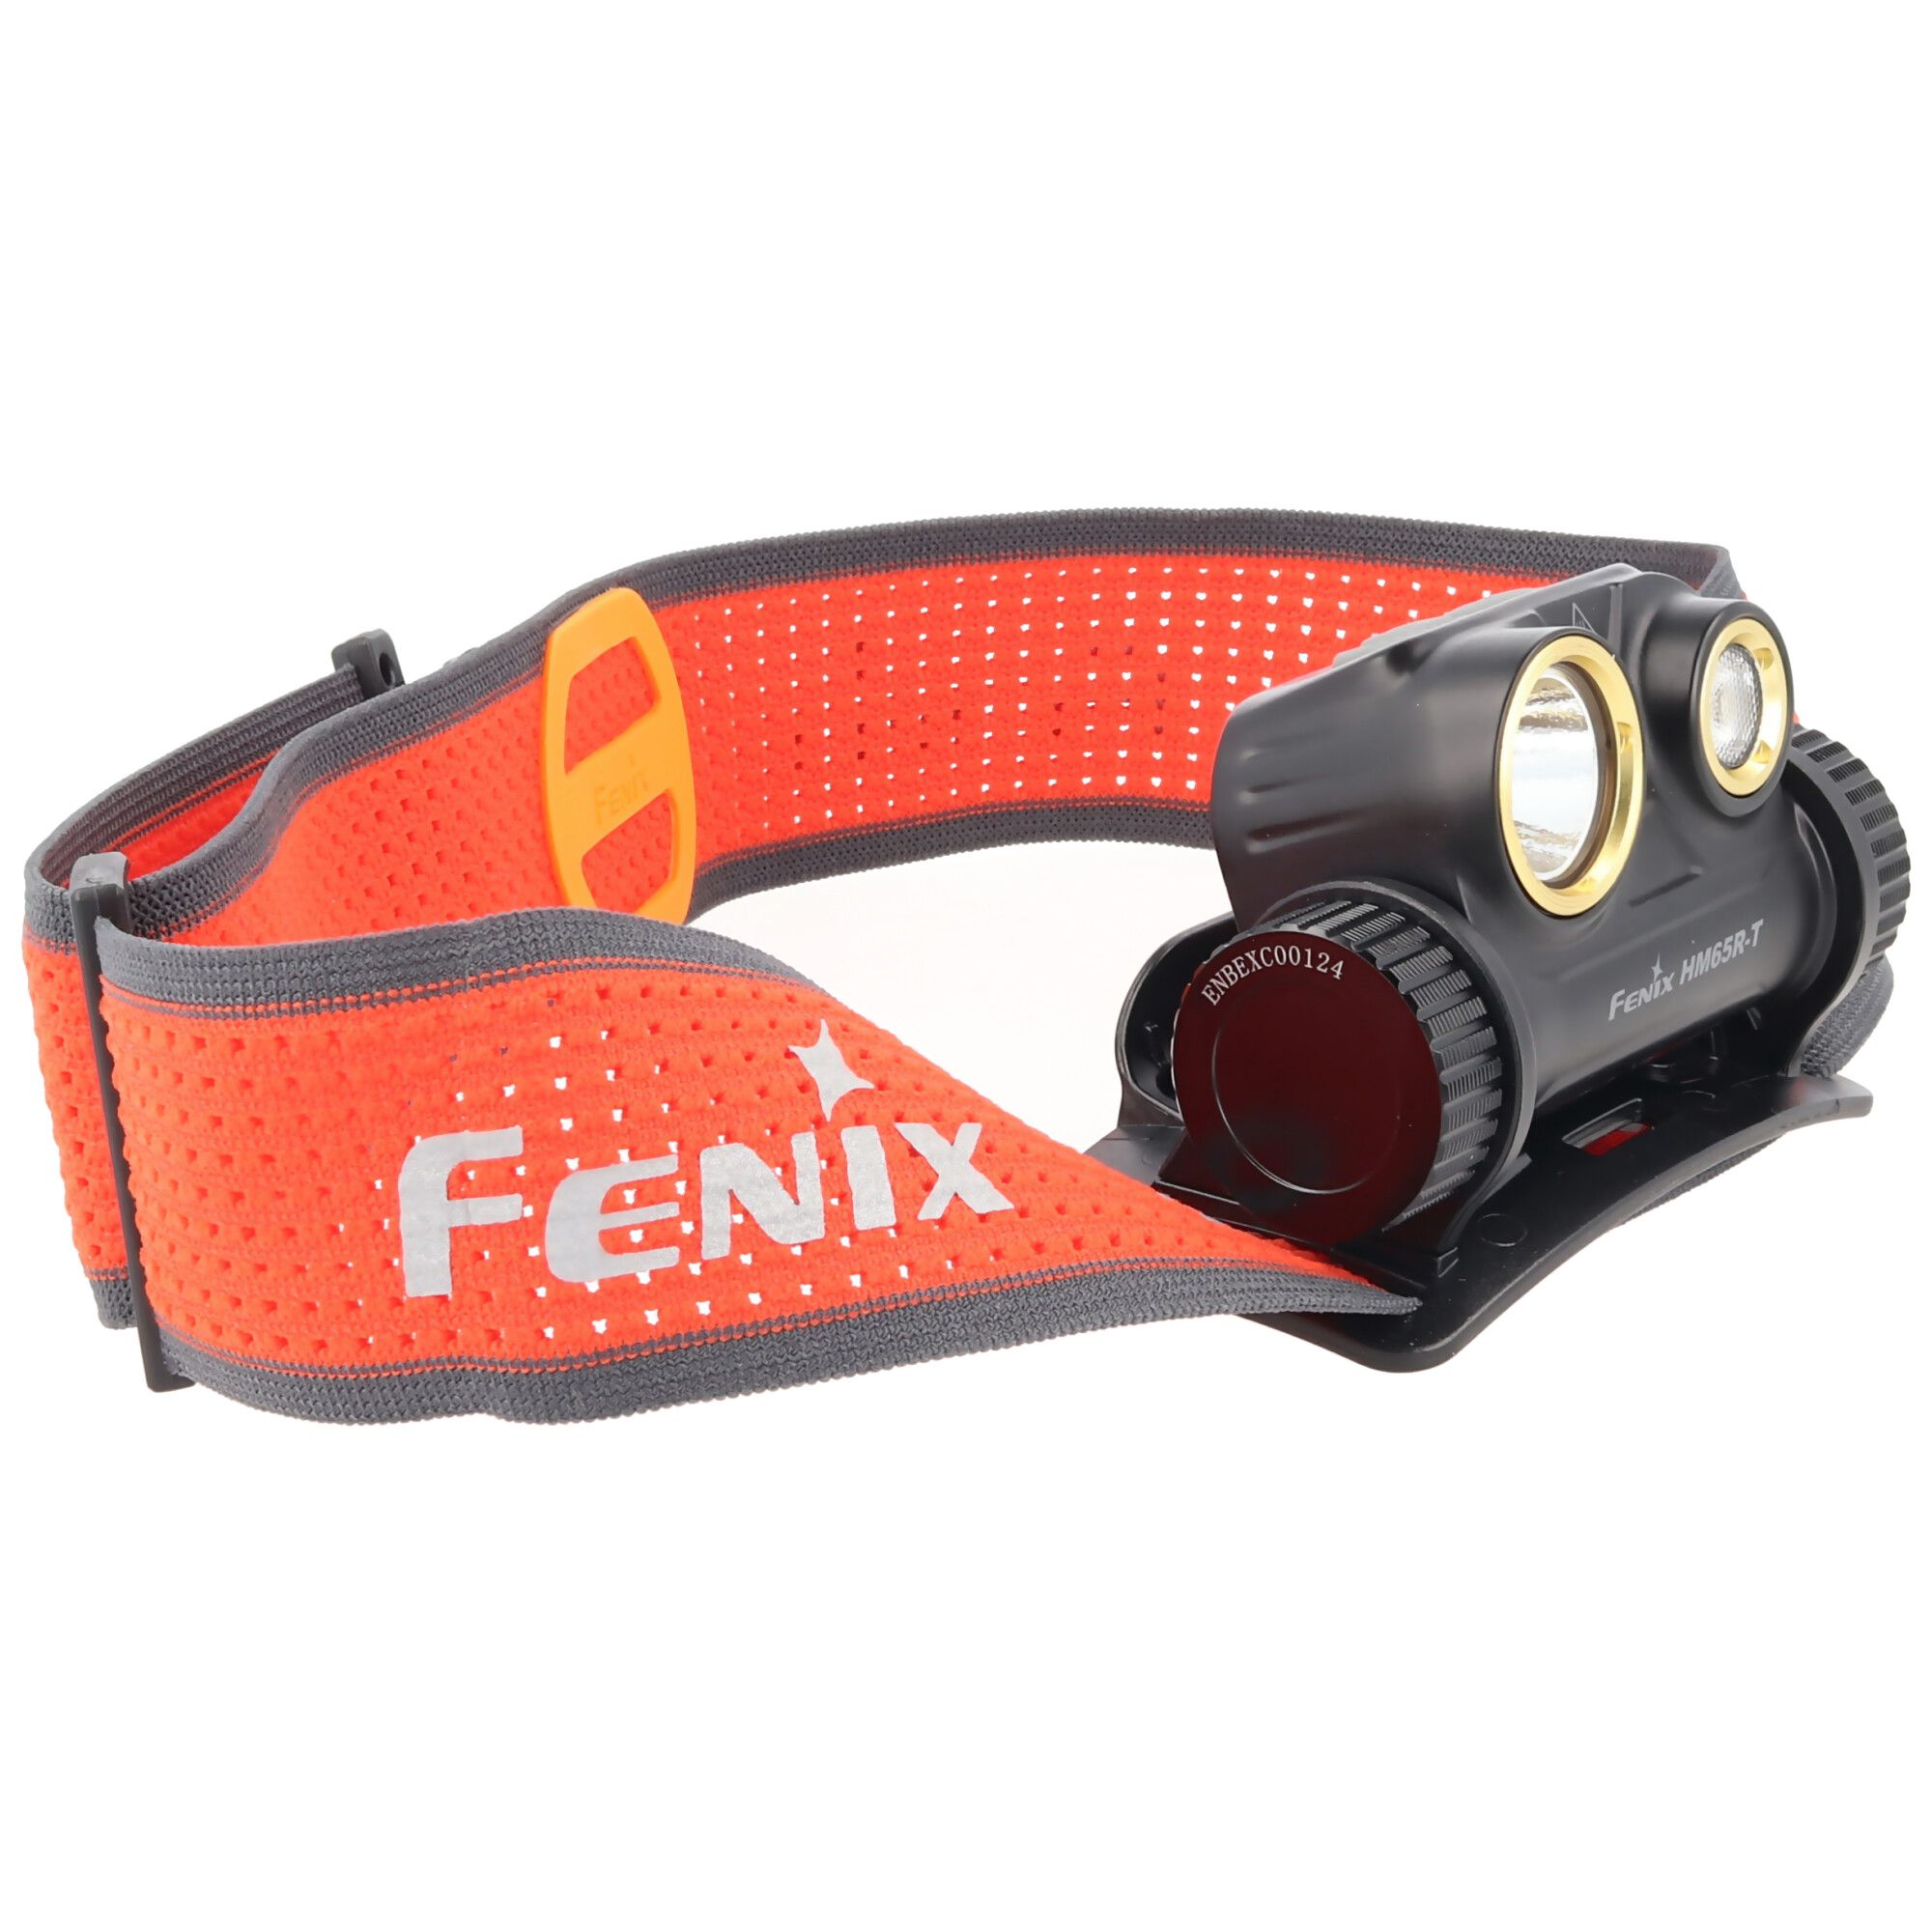 Fenix HM65R-T Stirnlampe, wiederaufladbare LED Stirnleuchte mit max. 1300 Lumen, Ladung über USB-C, inklusive Fenix ARB-L18-3500 Akku